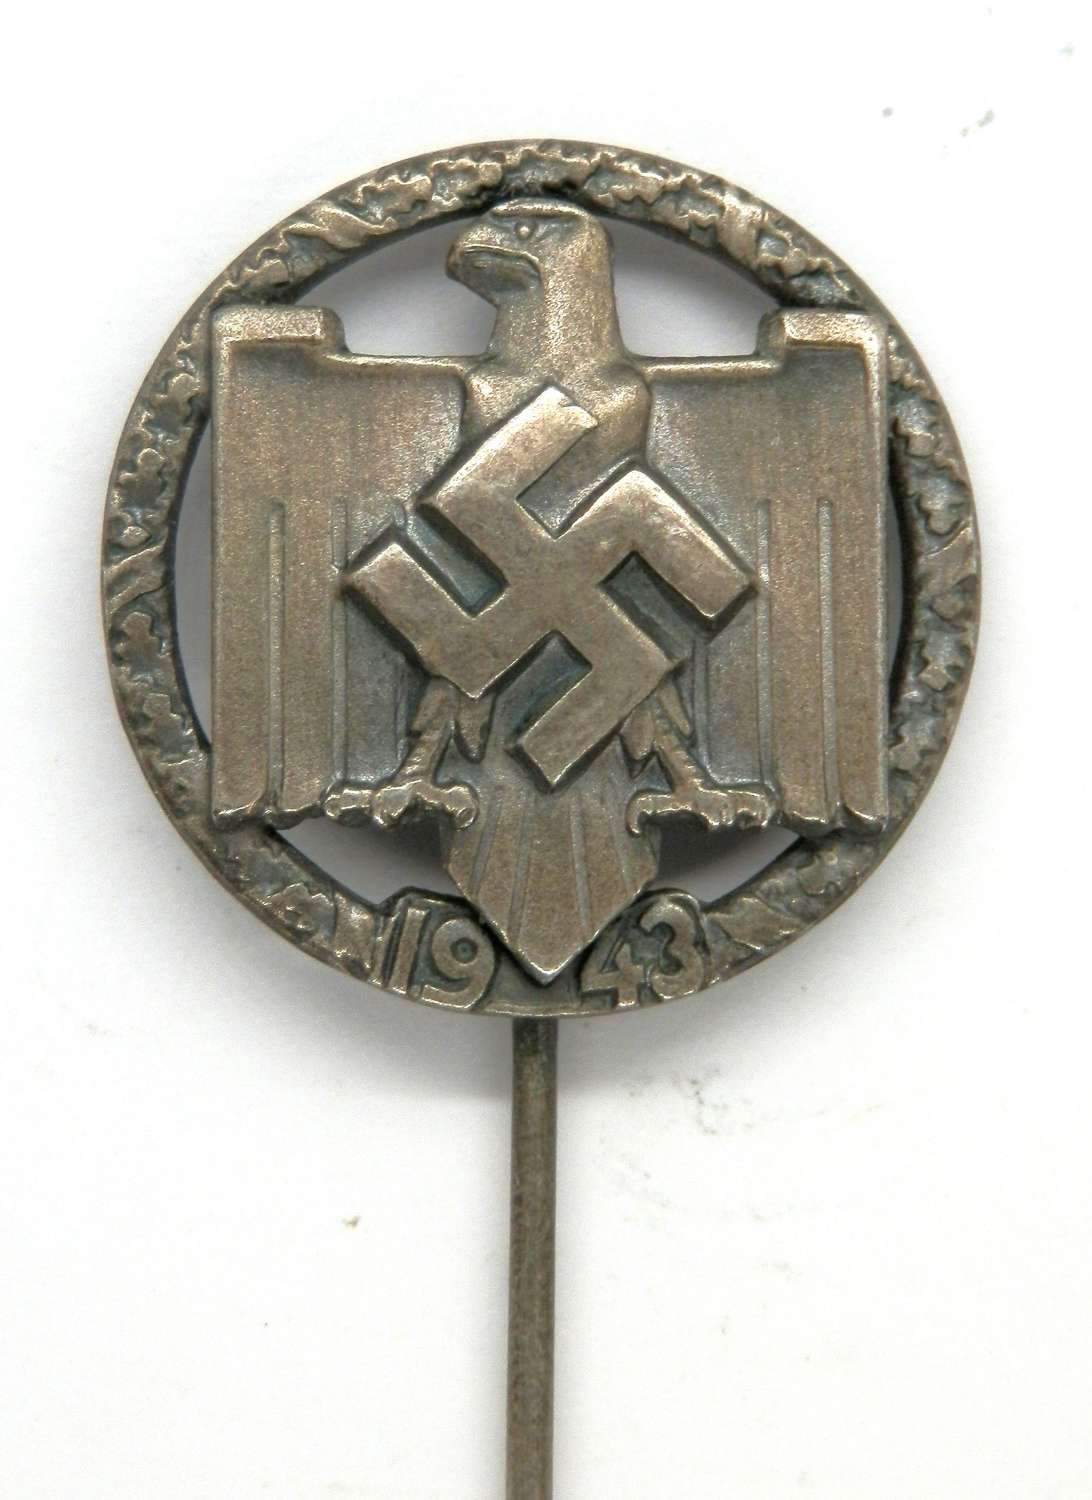 1943 NSRL Sports Organisation Silver Lapel Badge.